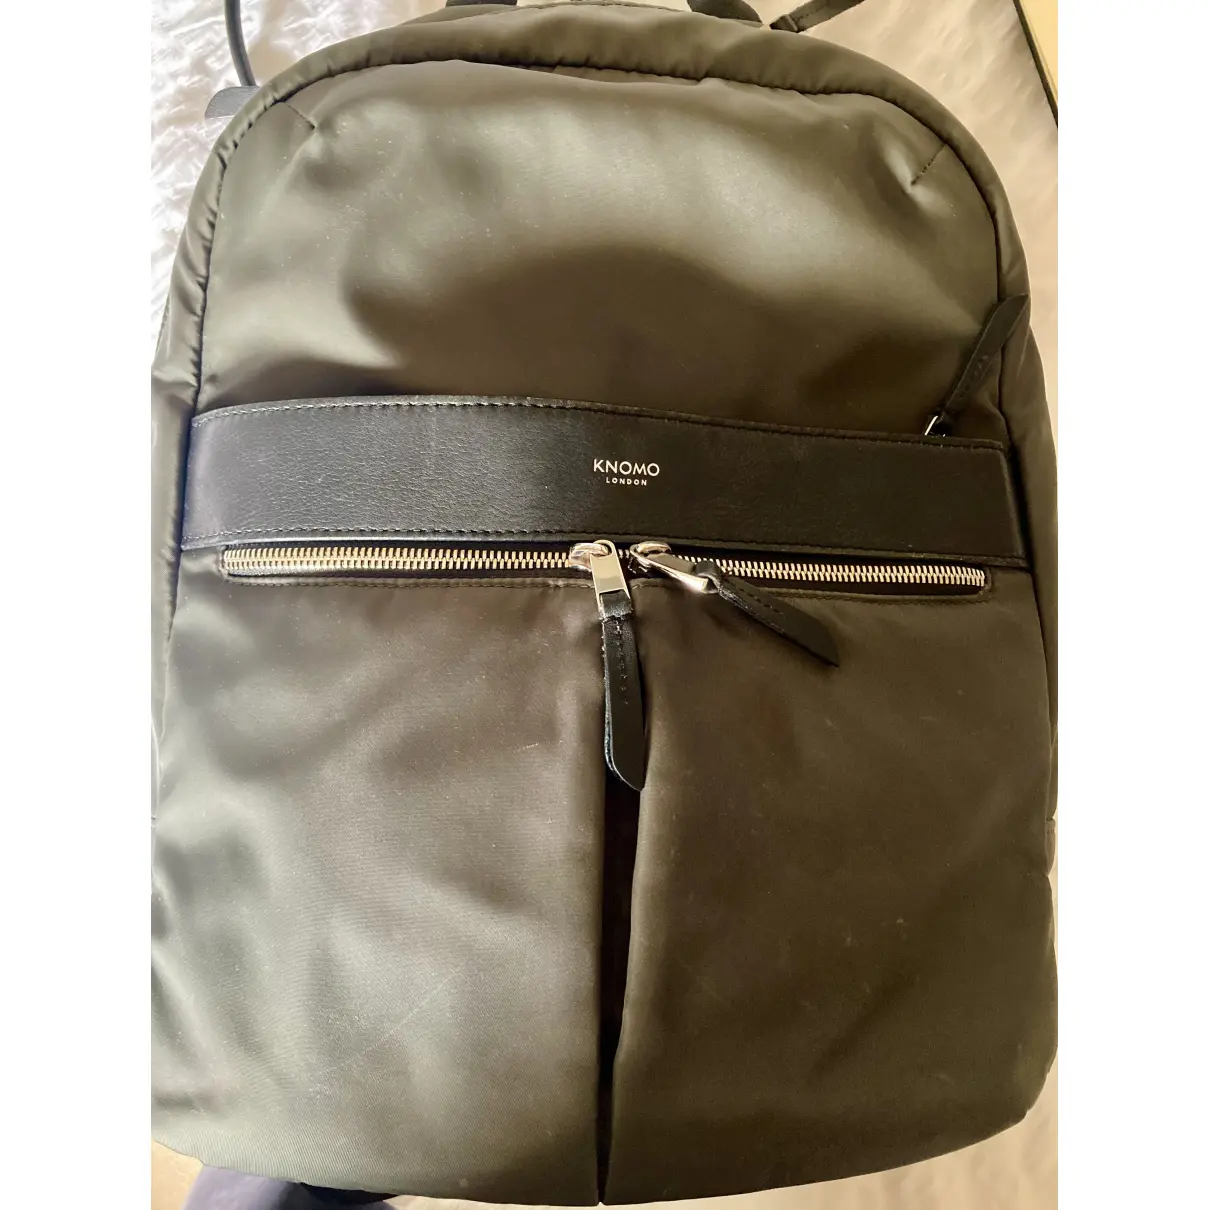 Backpack Knomo